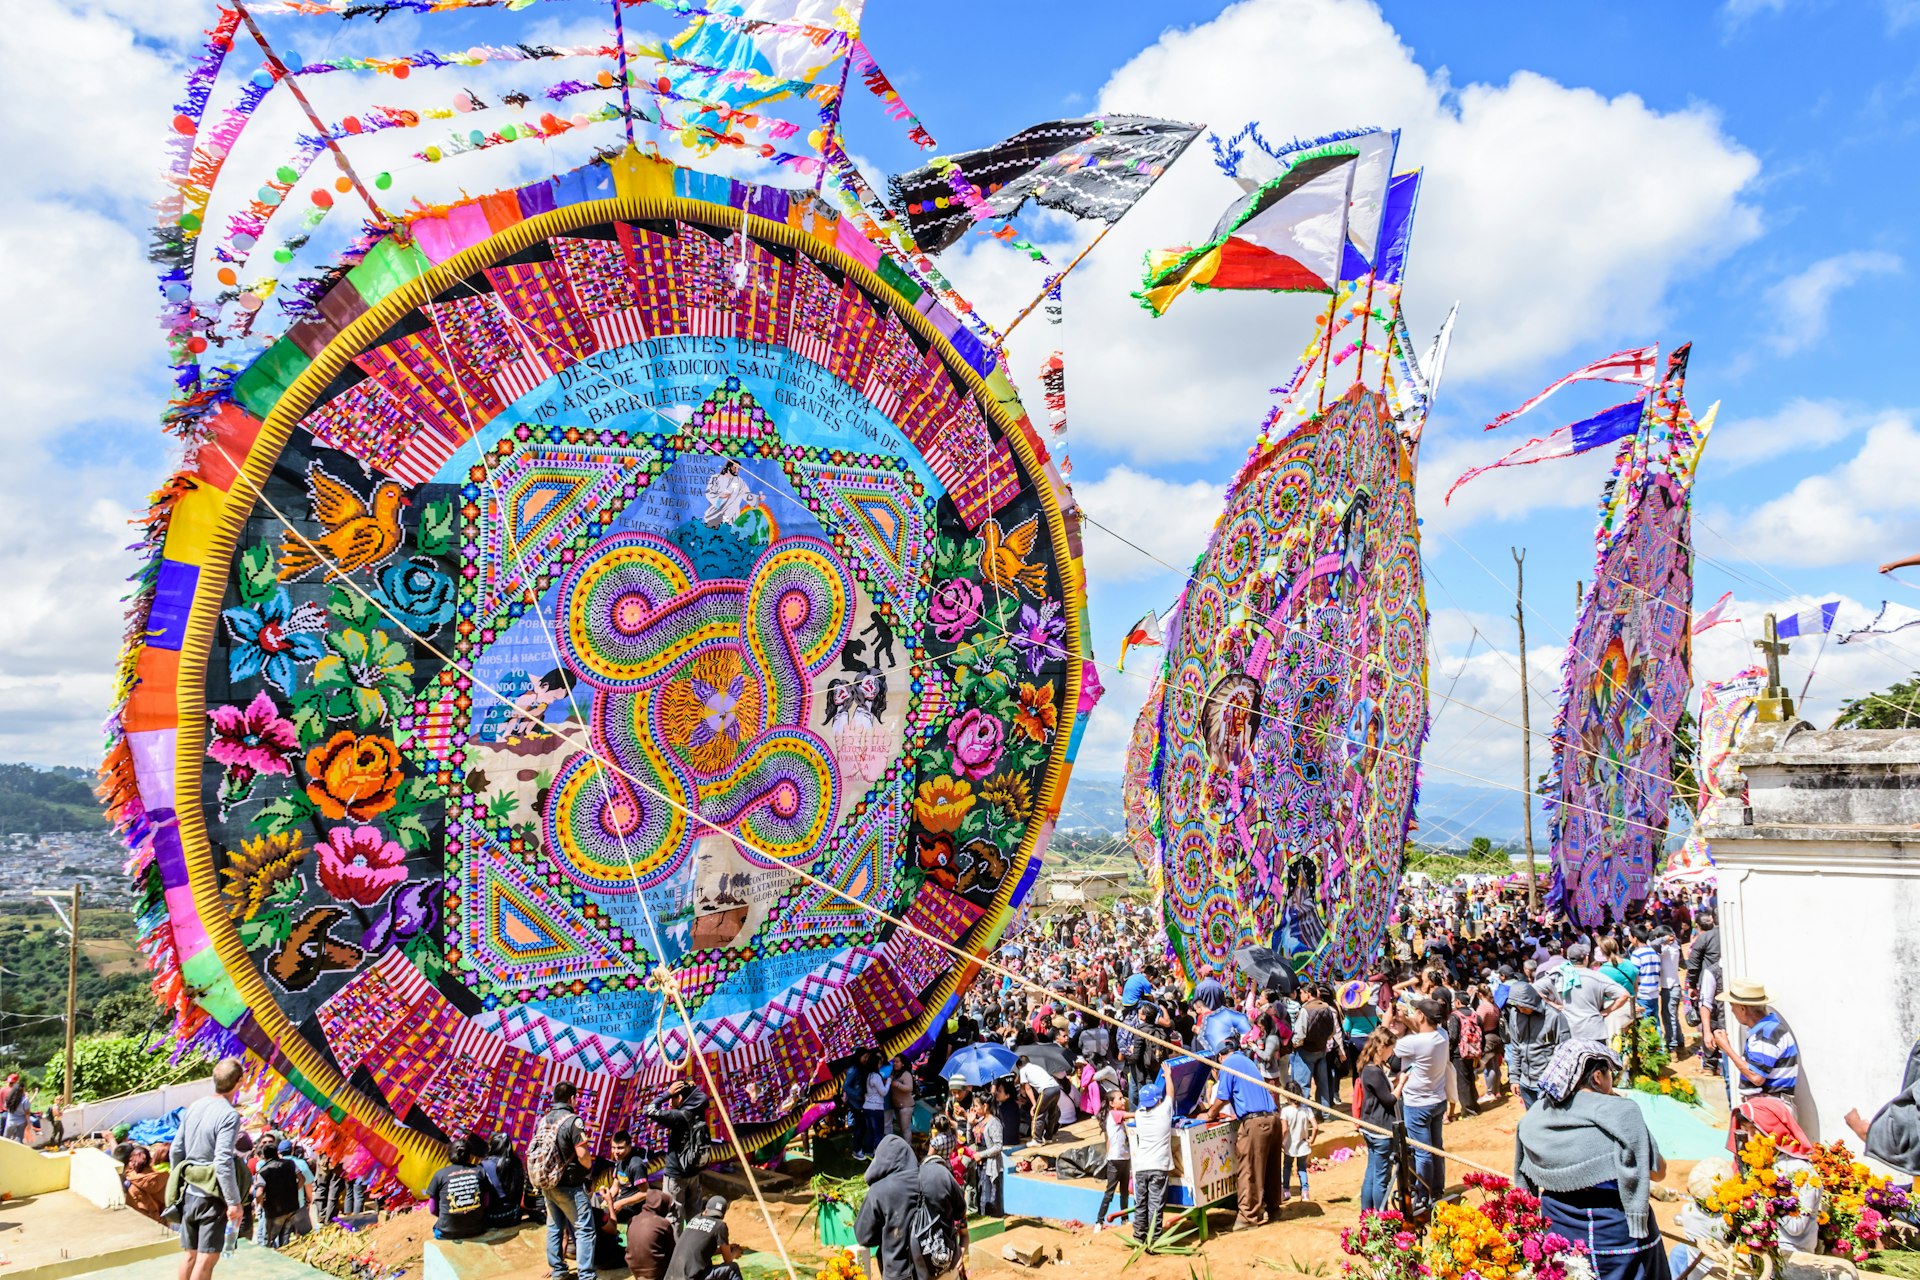 Giant colourful kites (barriletes) on All Saints Day in Guatemala